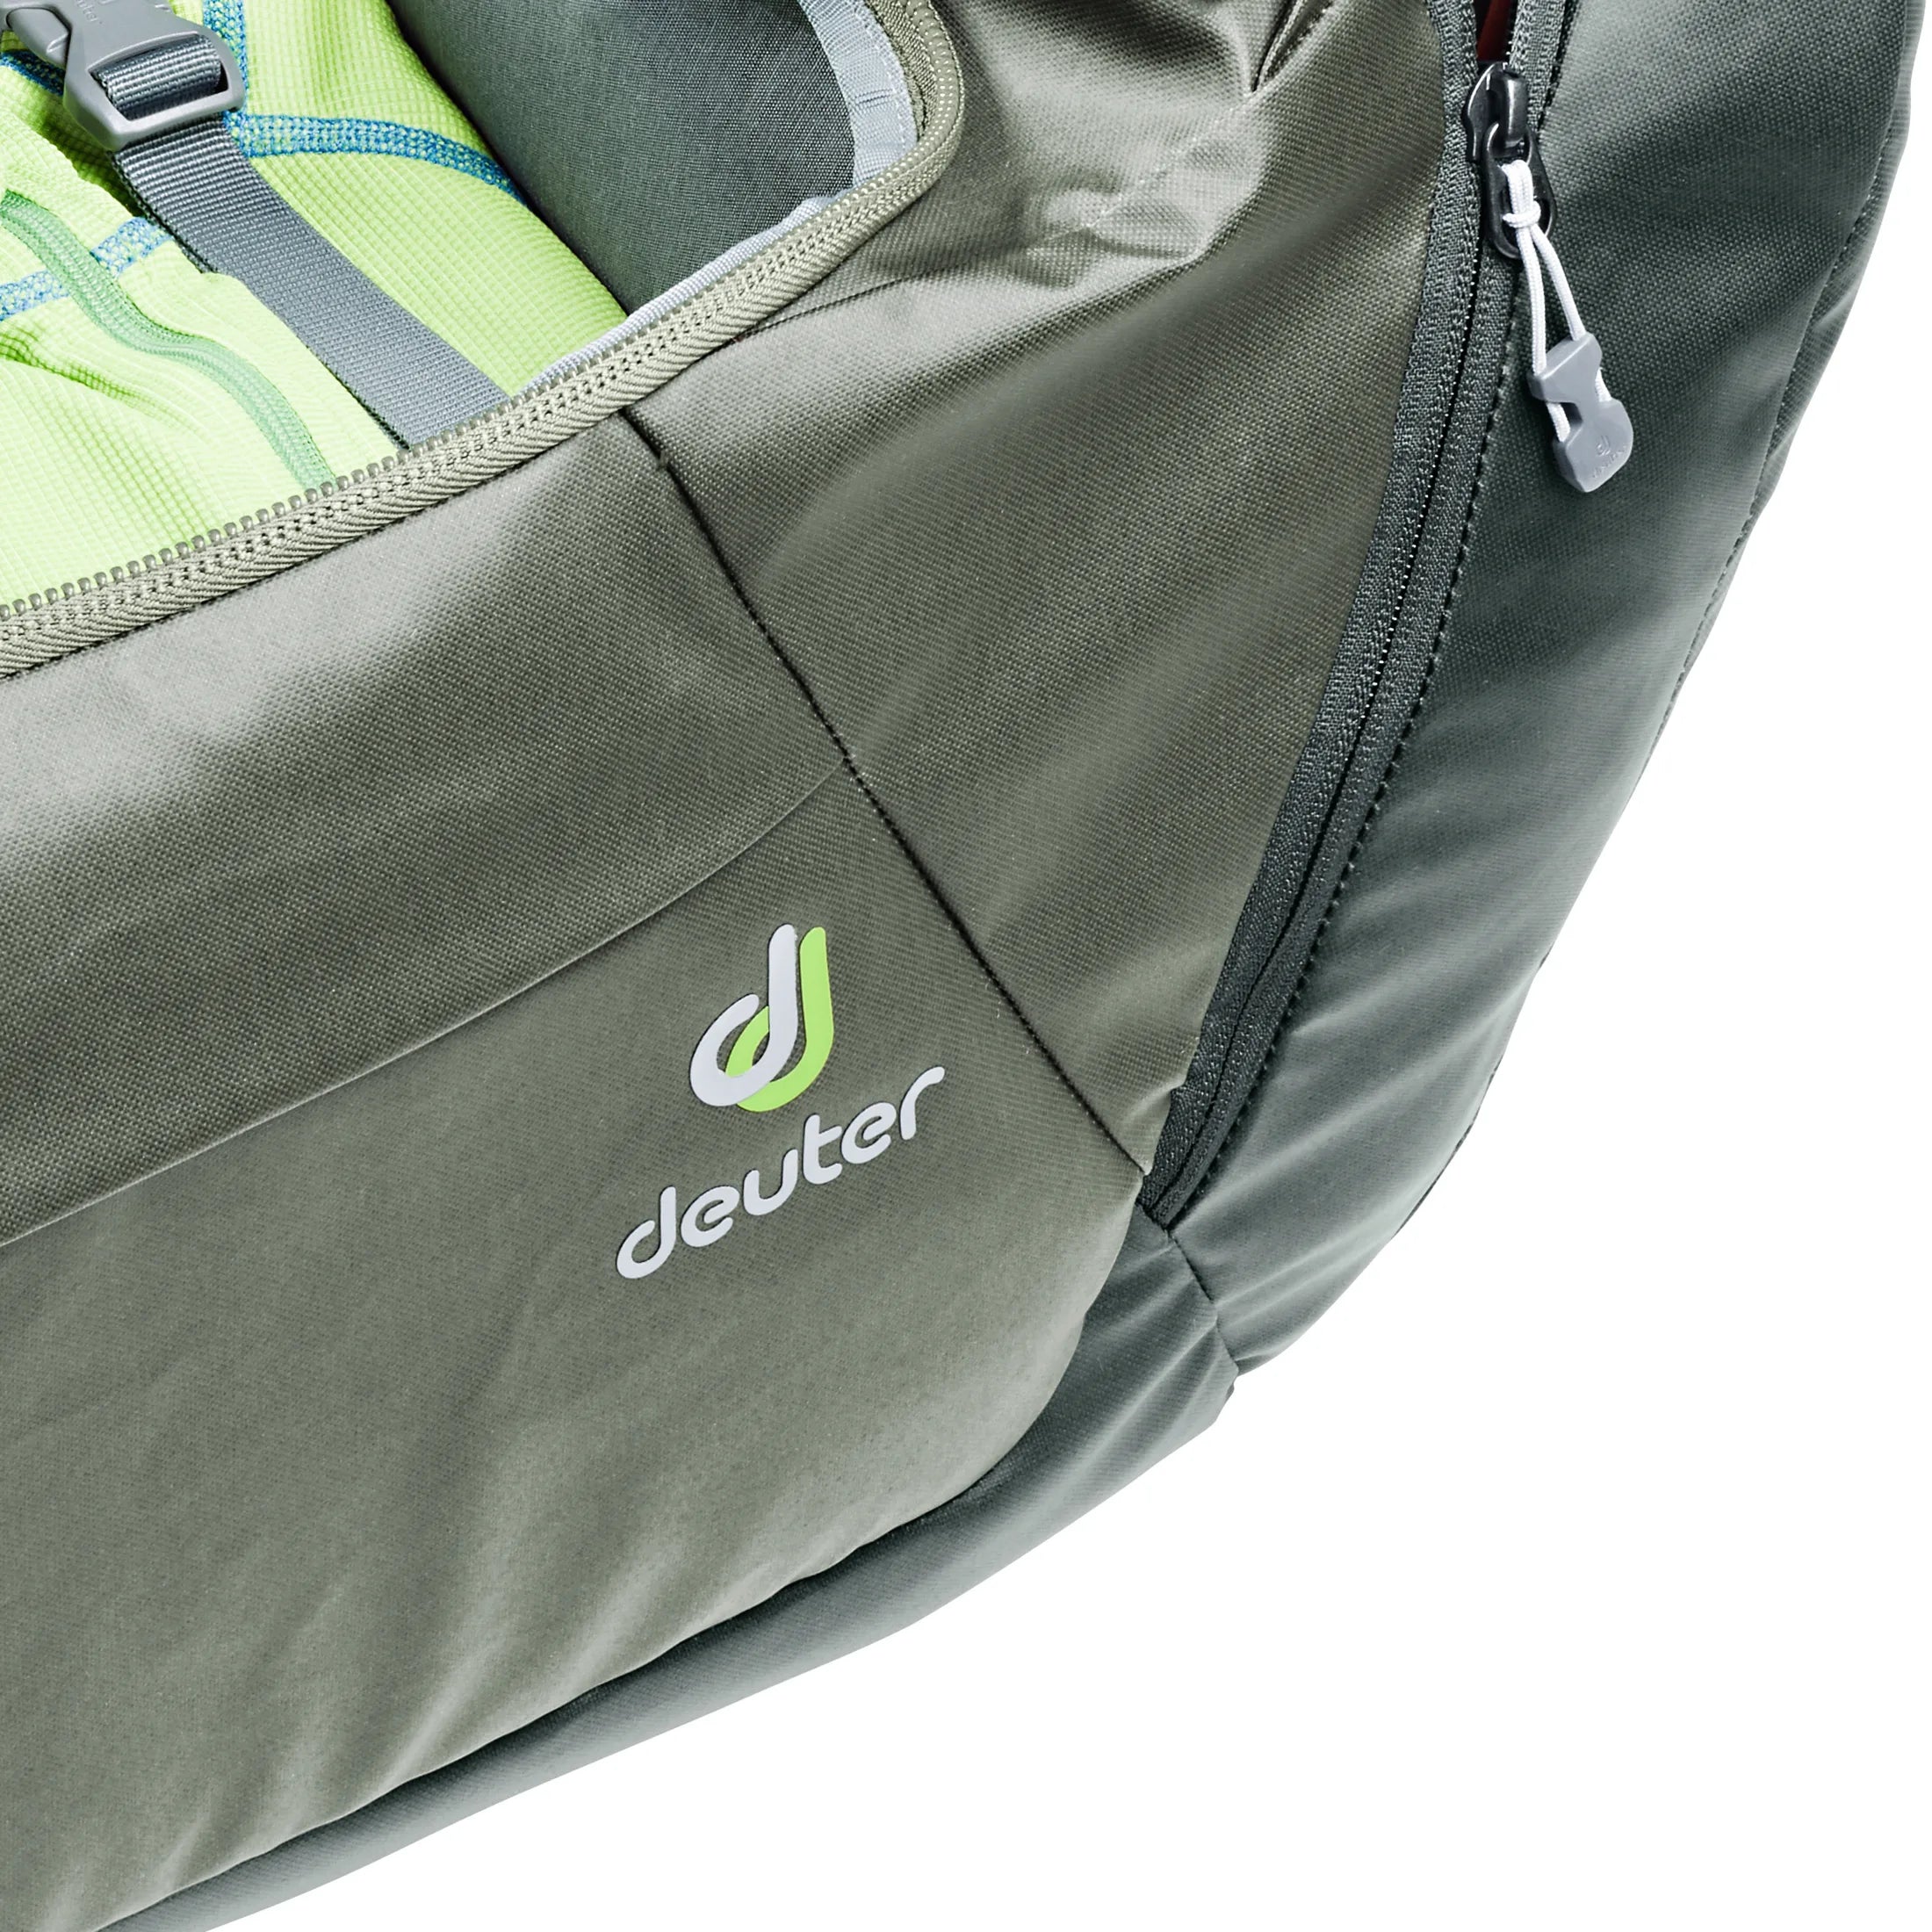 Deuter Travel Aviant Duffle Pro 40 sac de voyage 52 cm - maïs-curcuma